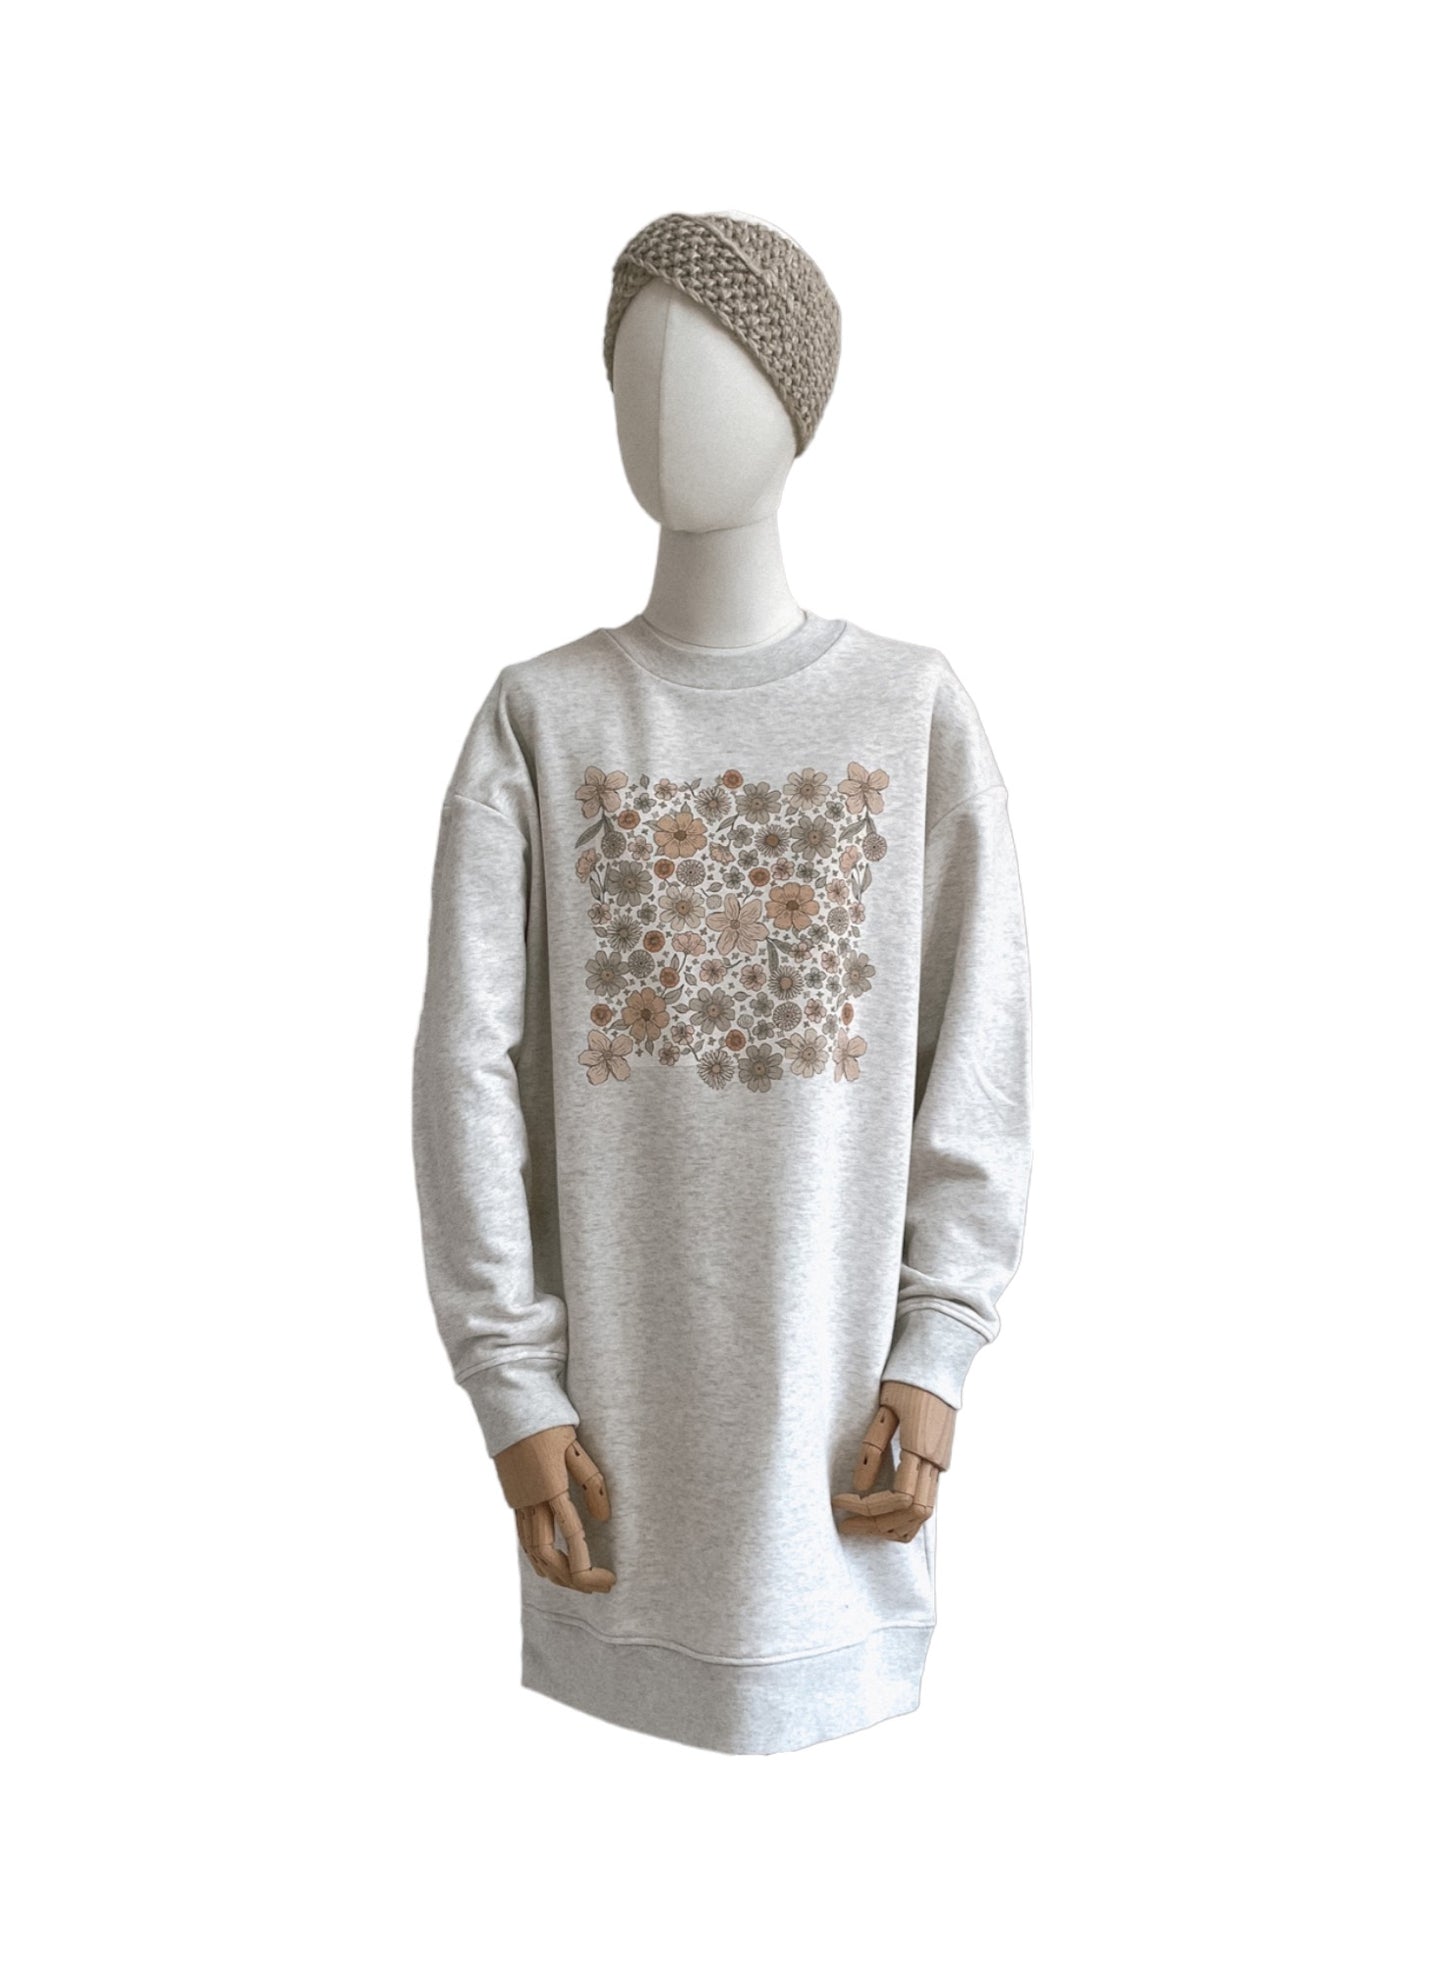 Oversized sweatshirt dress / Ecru Bold floral / creamy grey